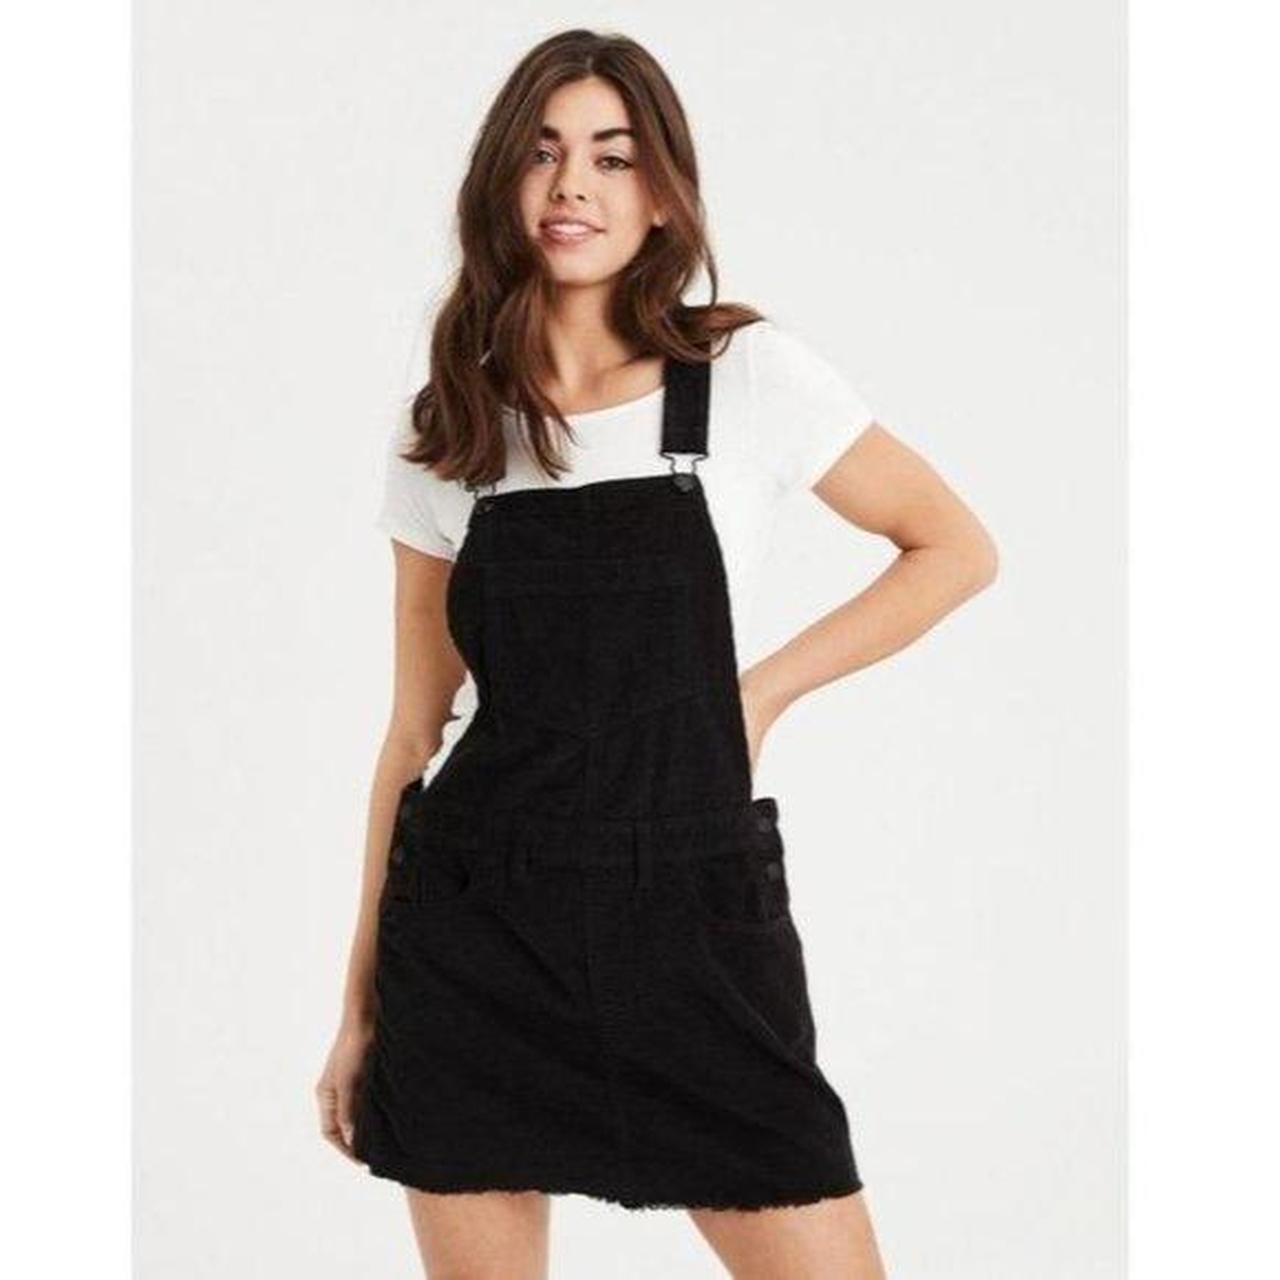 Buy Black Short Overalls, Overalls Womens Shorts on Sale Now. – RomperJill